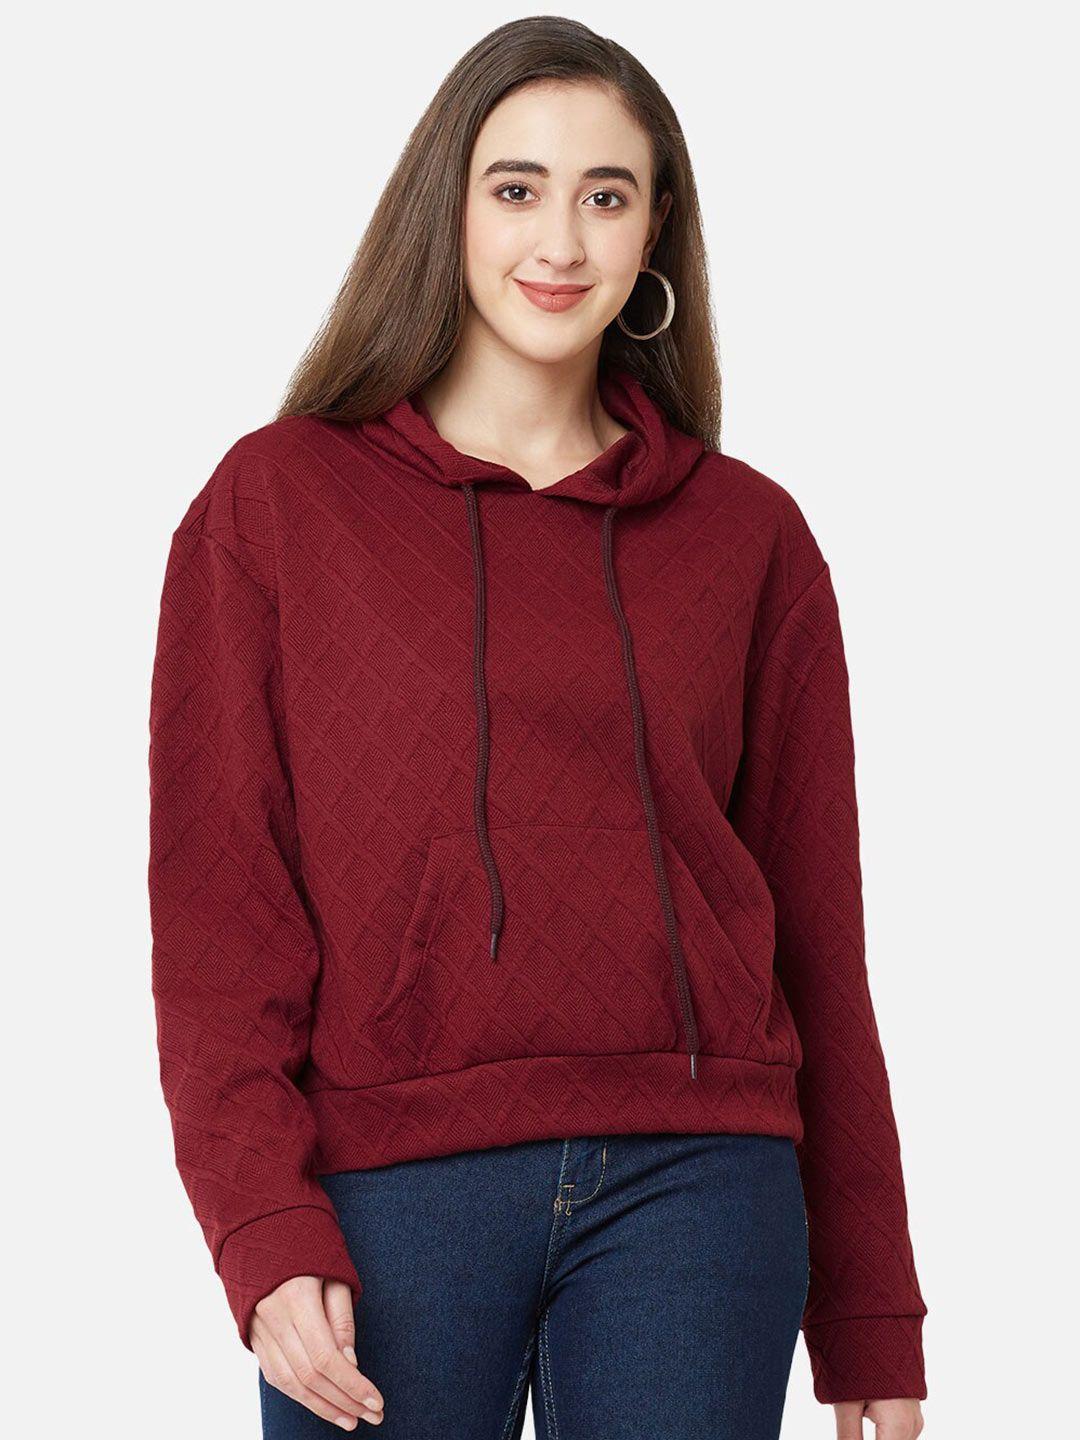 109f-women-maroon-hooded-sweatshirt